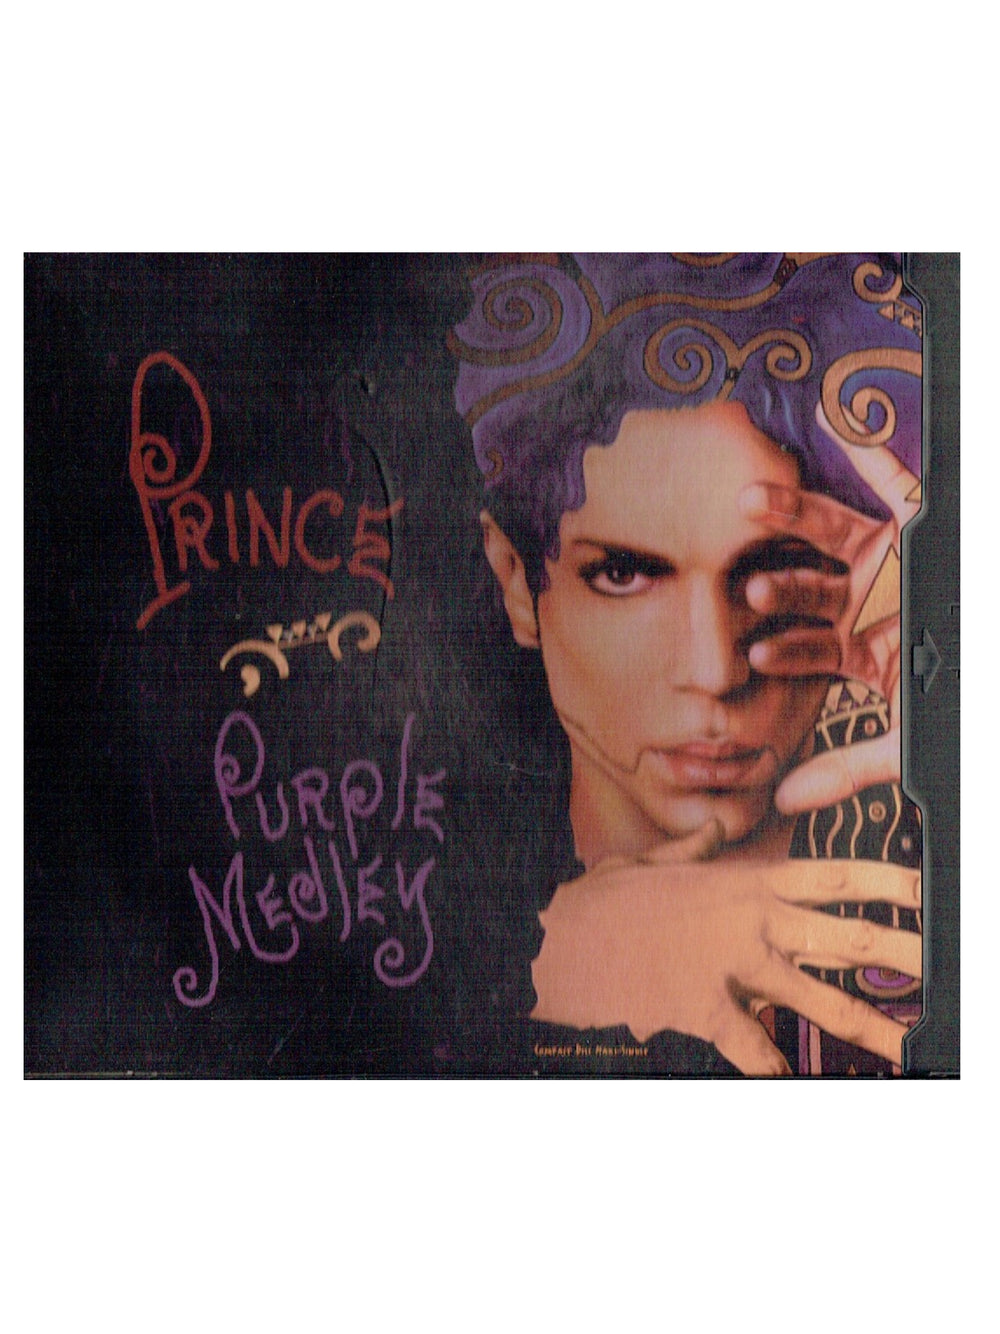 Prince – Purple Medley CD Single Flip Case 1995 Original USA Release Rare